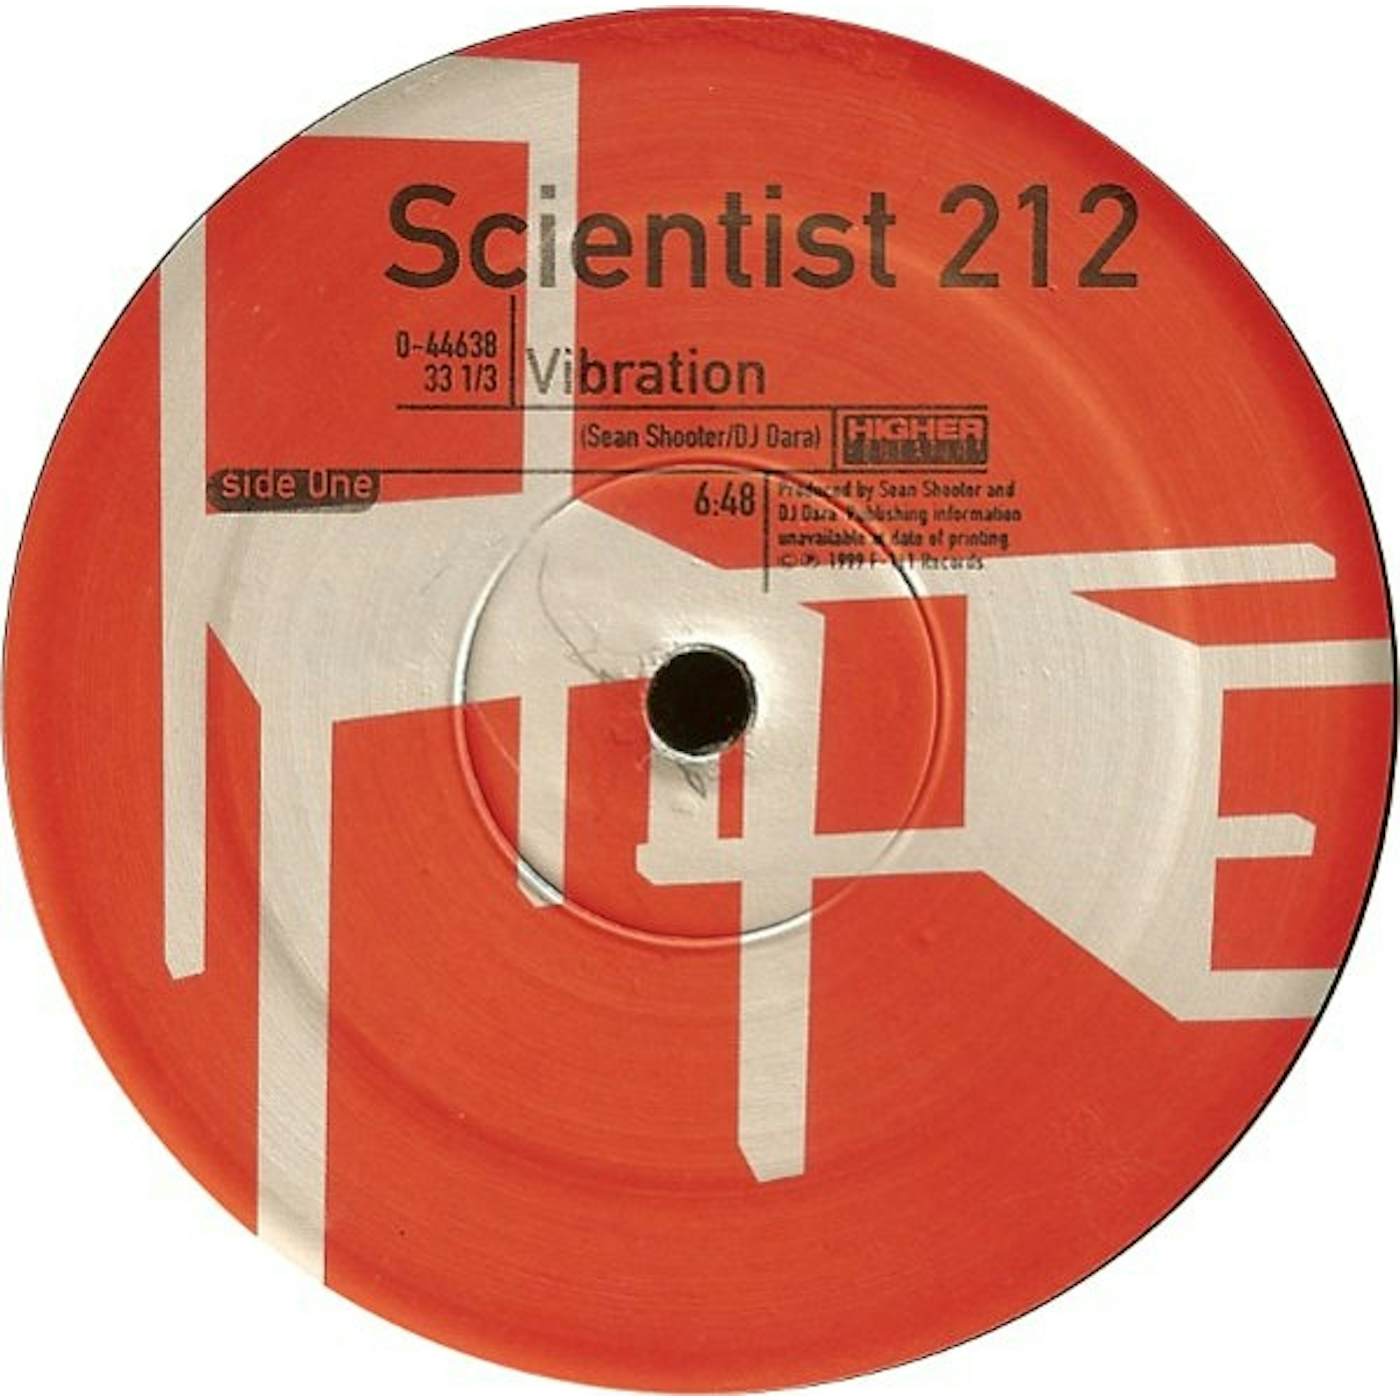 Scientist 212 VIBRATION Vinyl Record